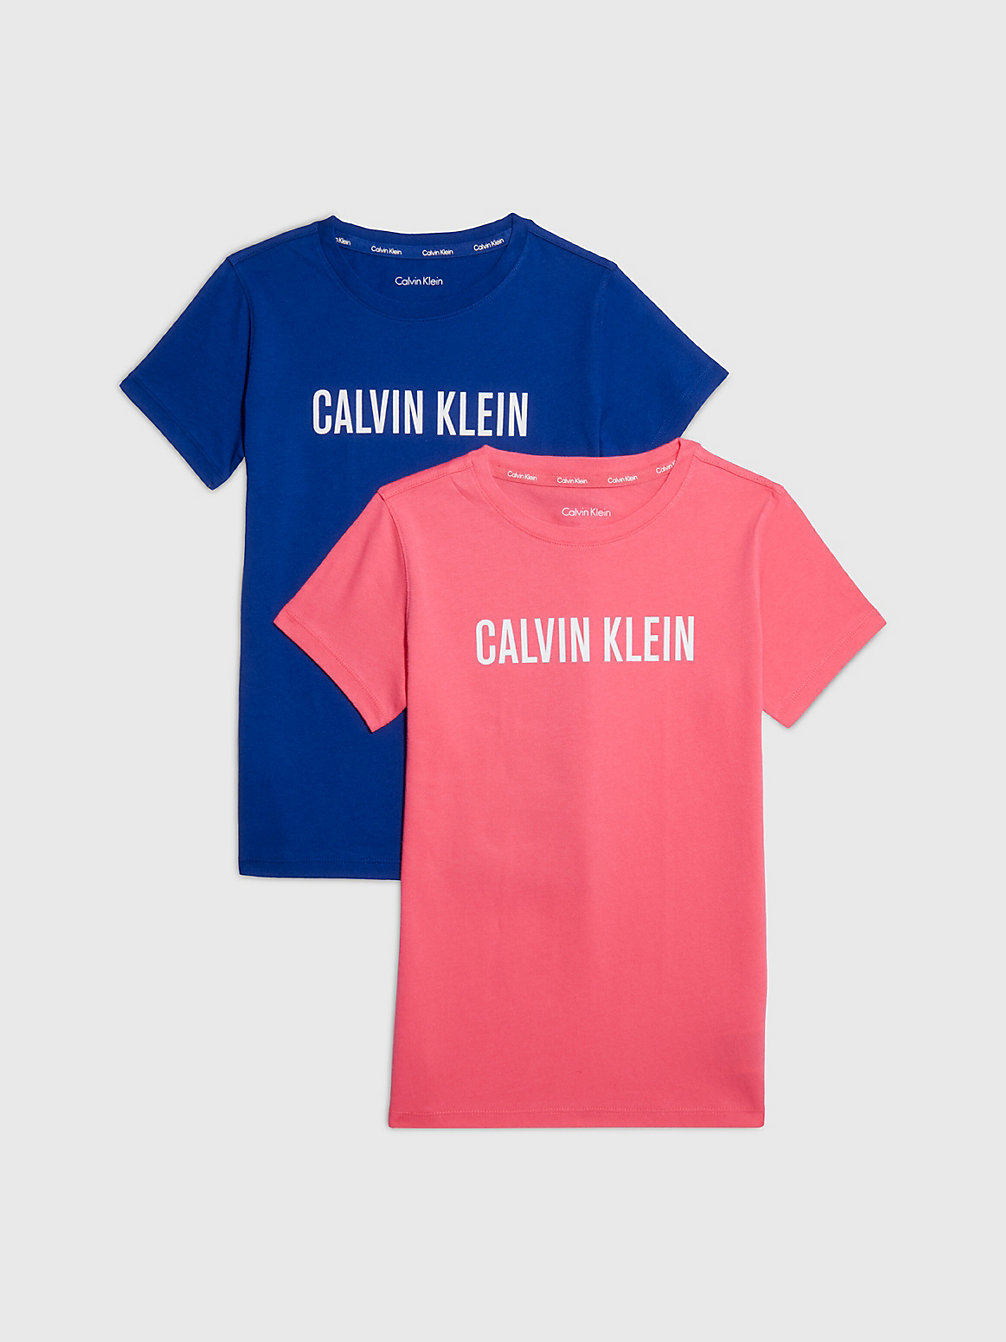 PINKFLASH/BOLDBLUE > 2er-Pack T-Shirts - Intense Power > undefined girls - Calvin Klein